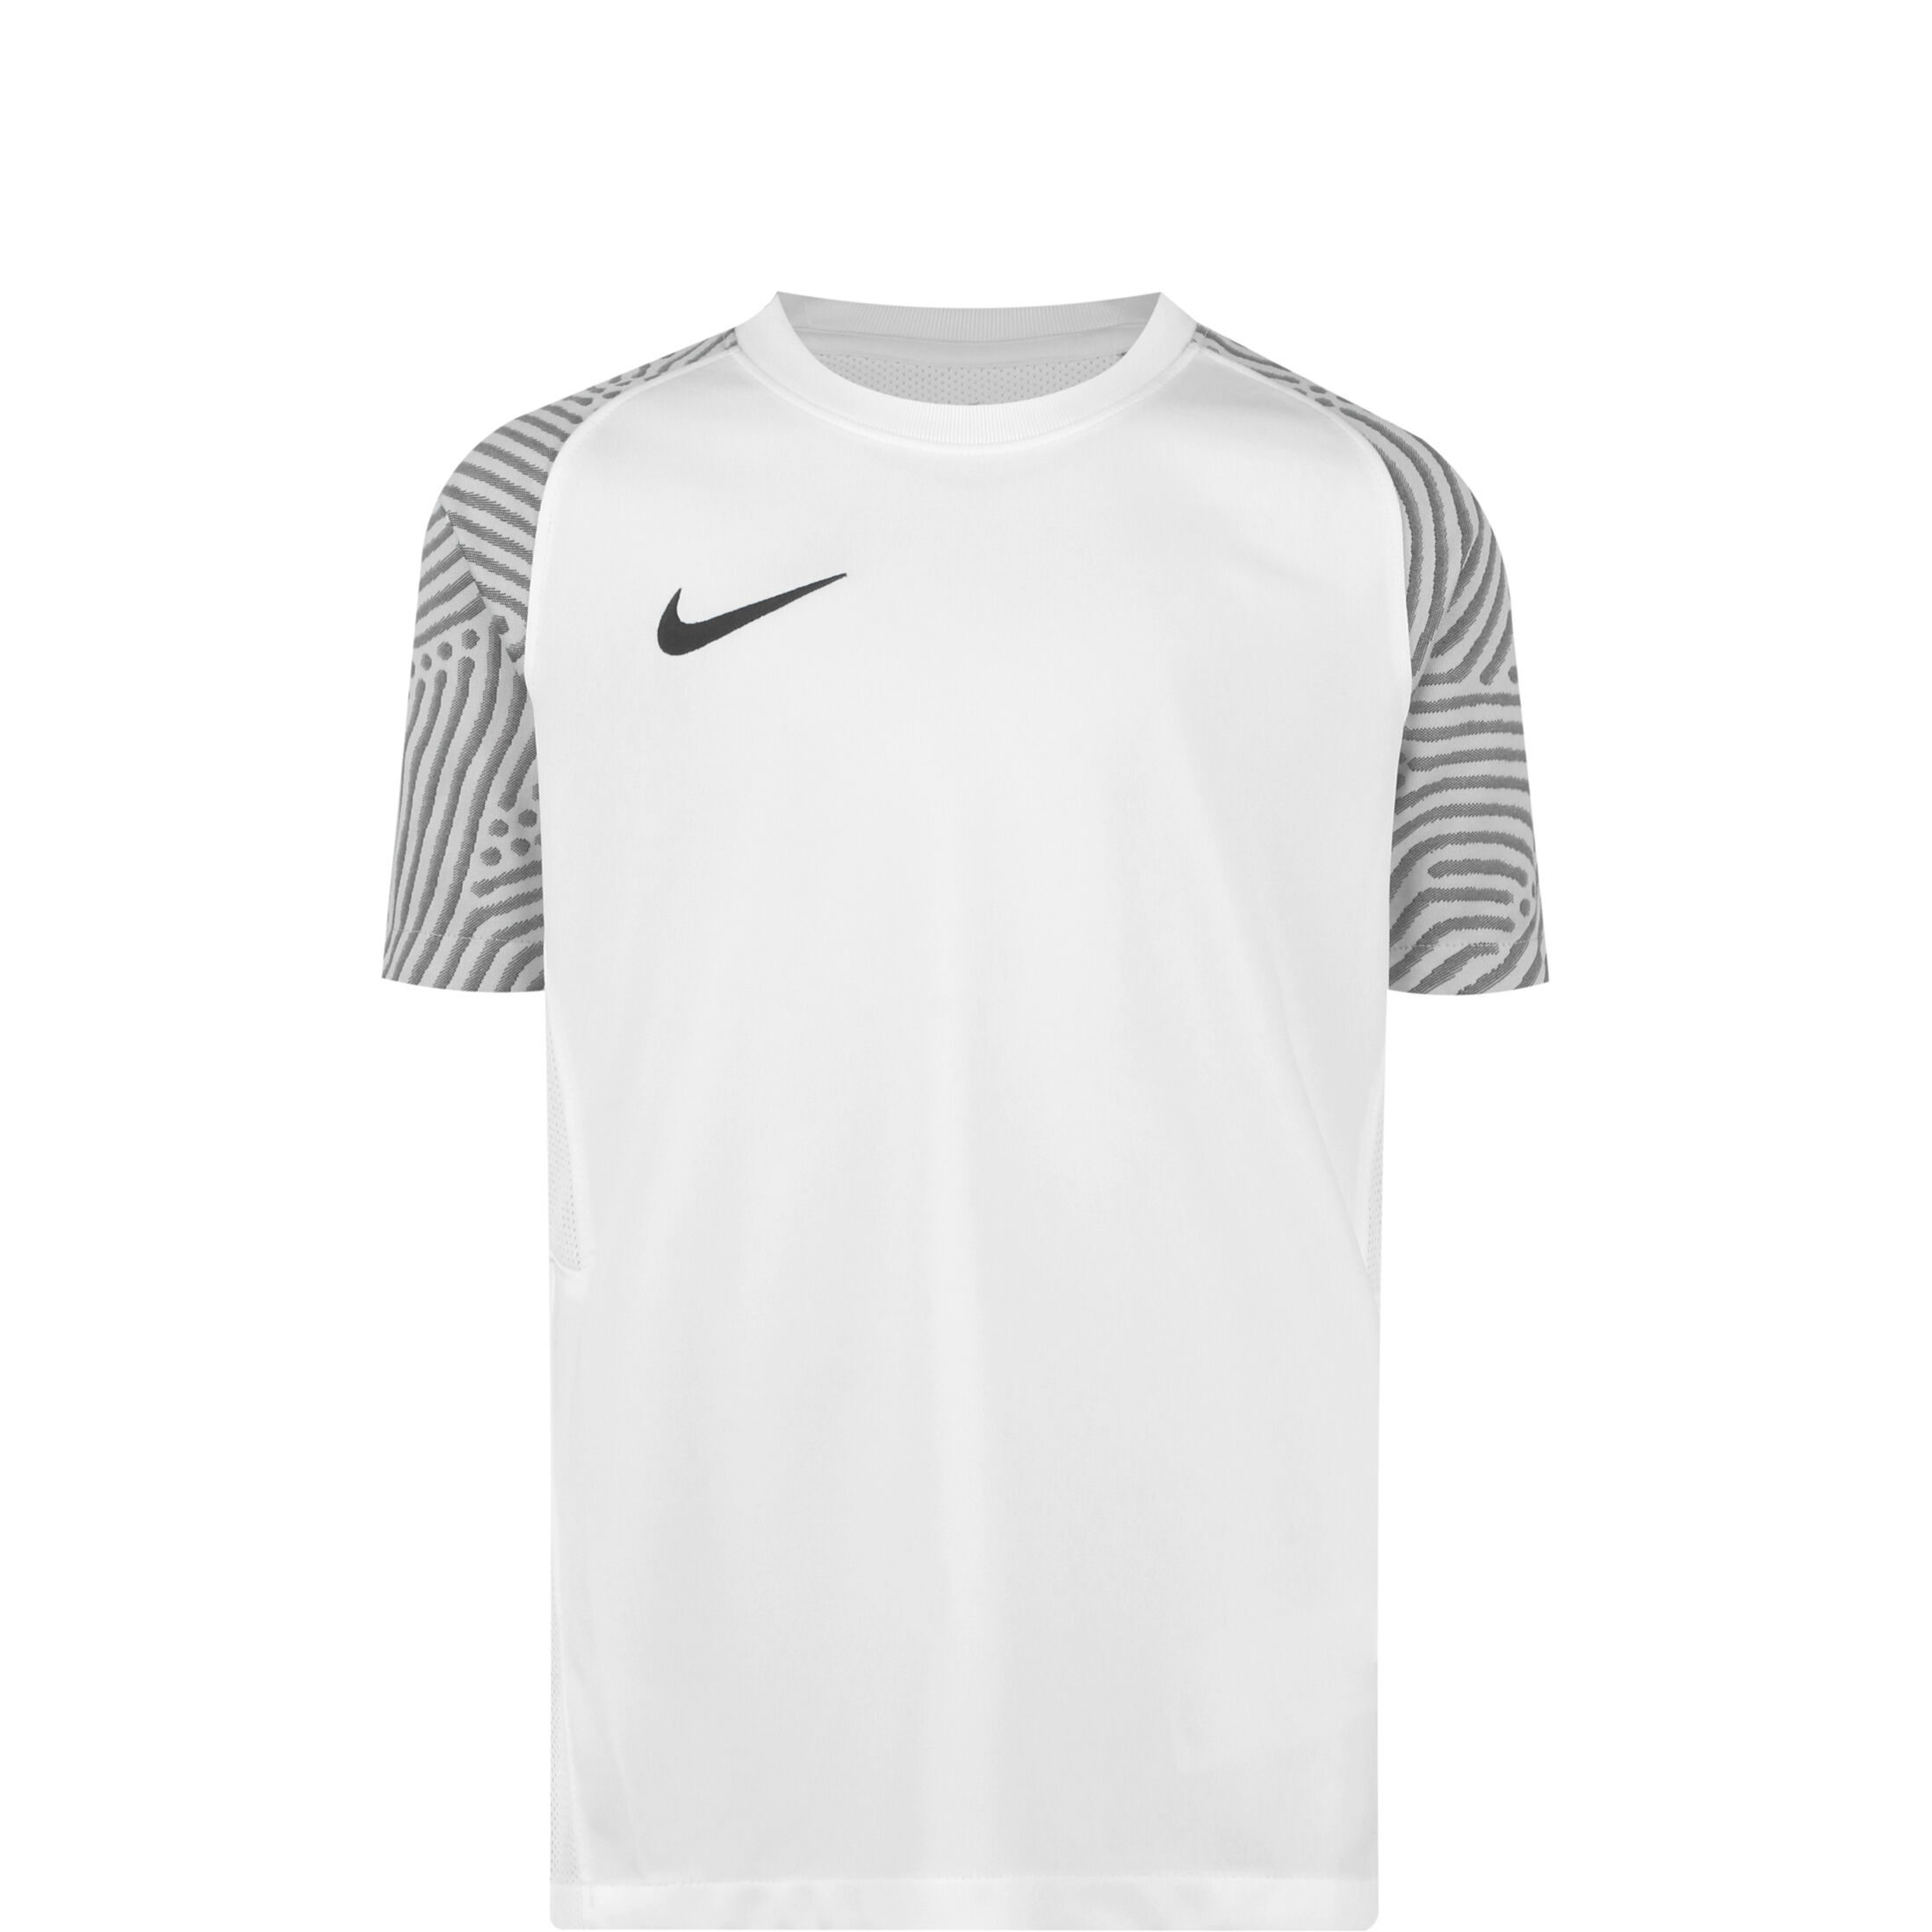 Спортивная футболка Nike Fußballtrikot Strike II, белый футболка игровая подростковая nike strike ii cw3557 100